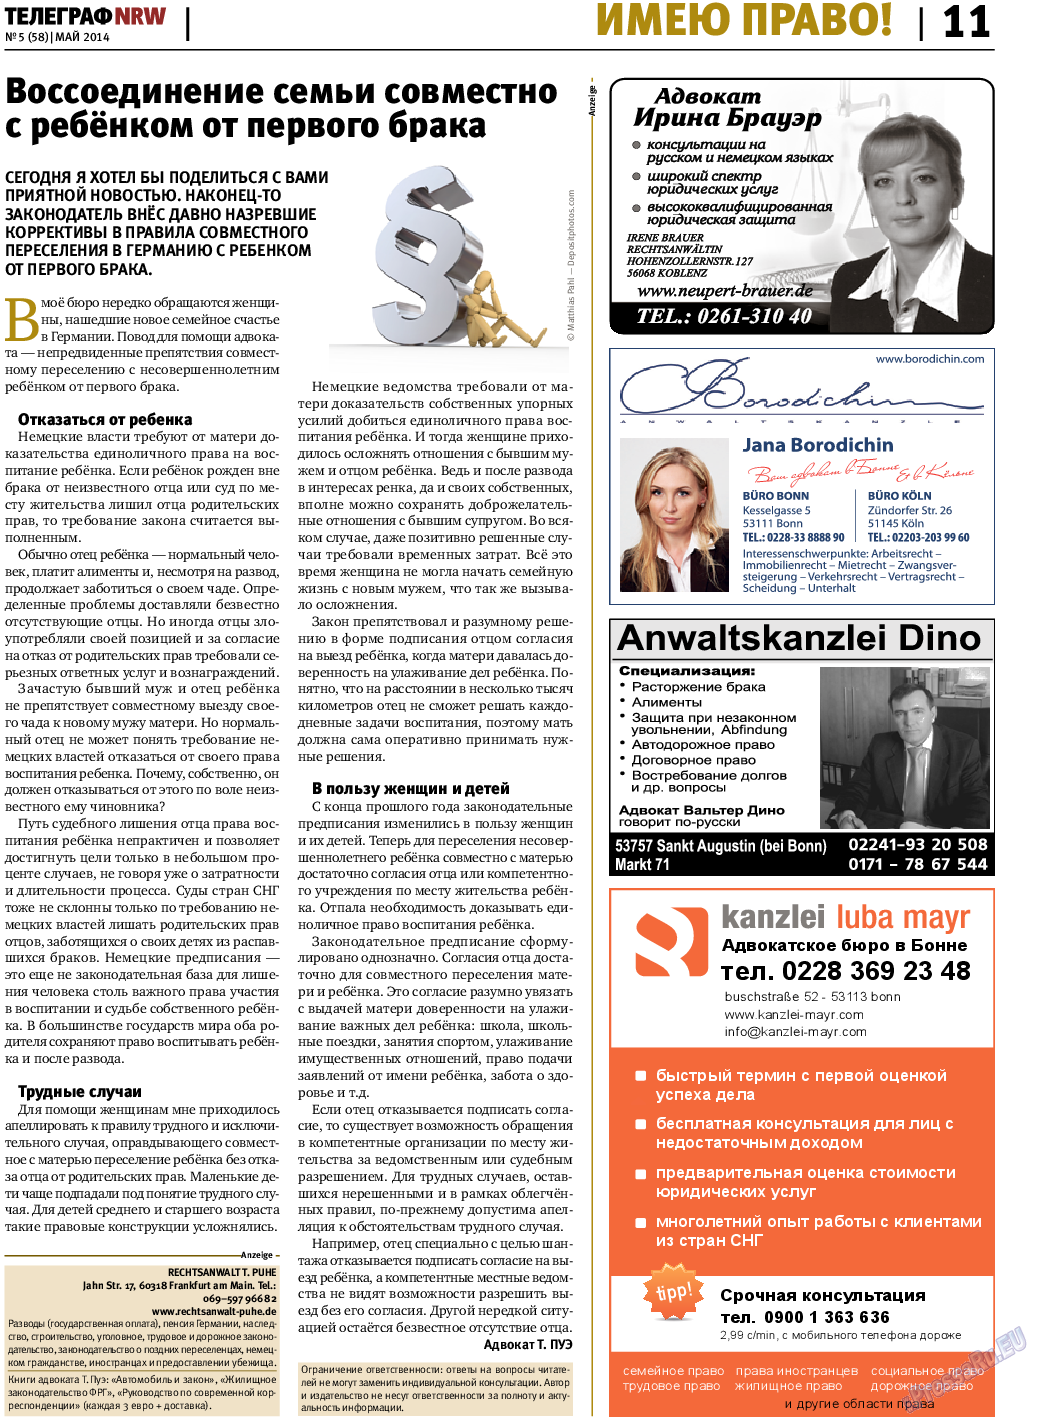 Телеграф NRW, газета. 2014 №5 стр.11